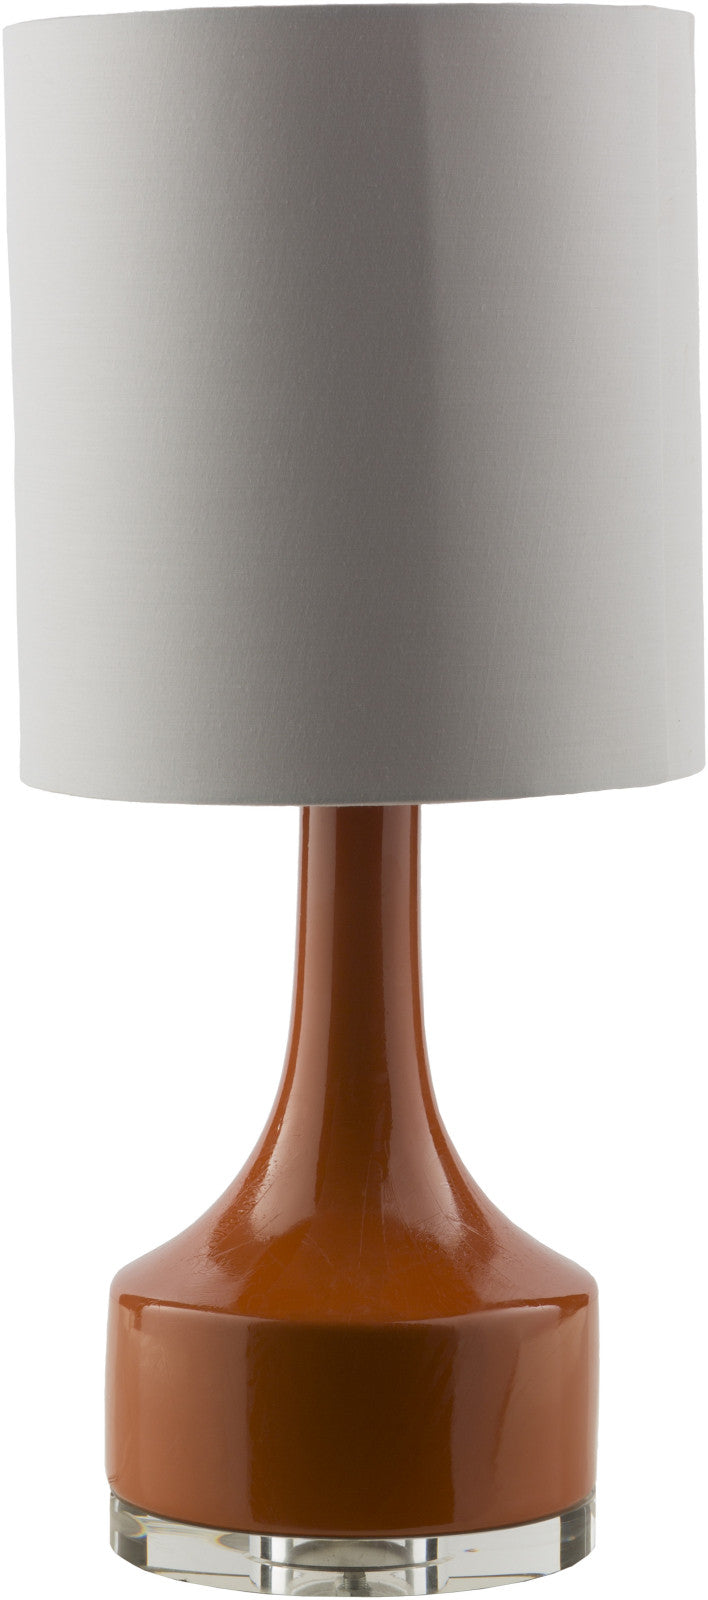 Surya Farris FRR-357 White Lamp Table Lamp